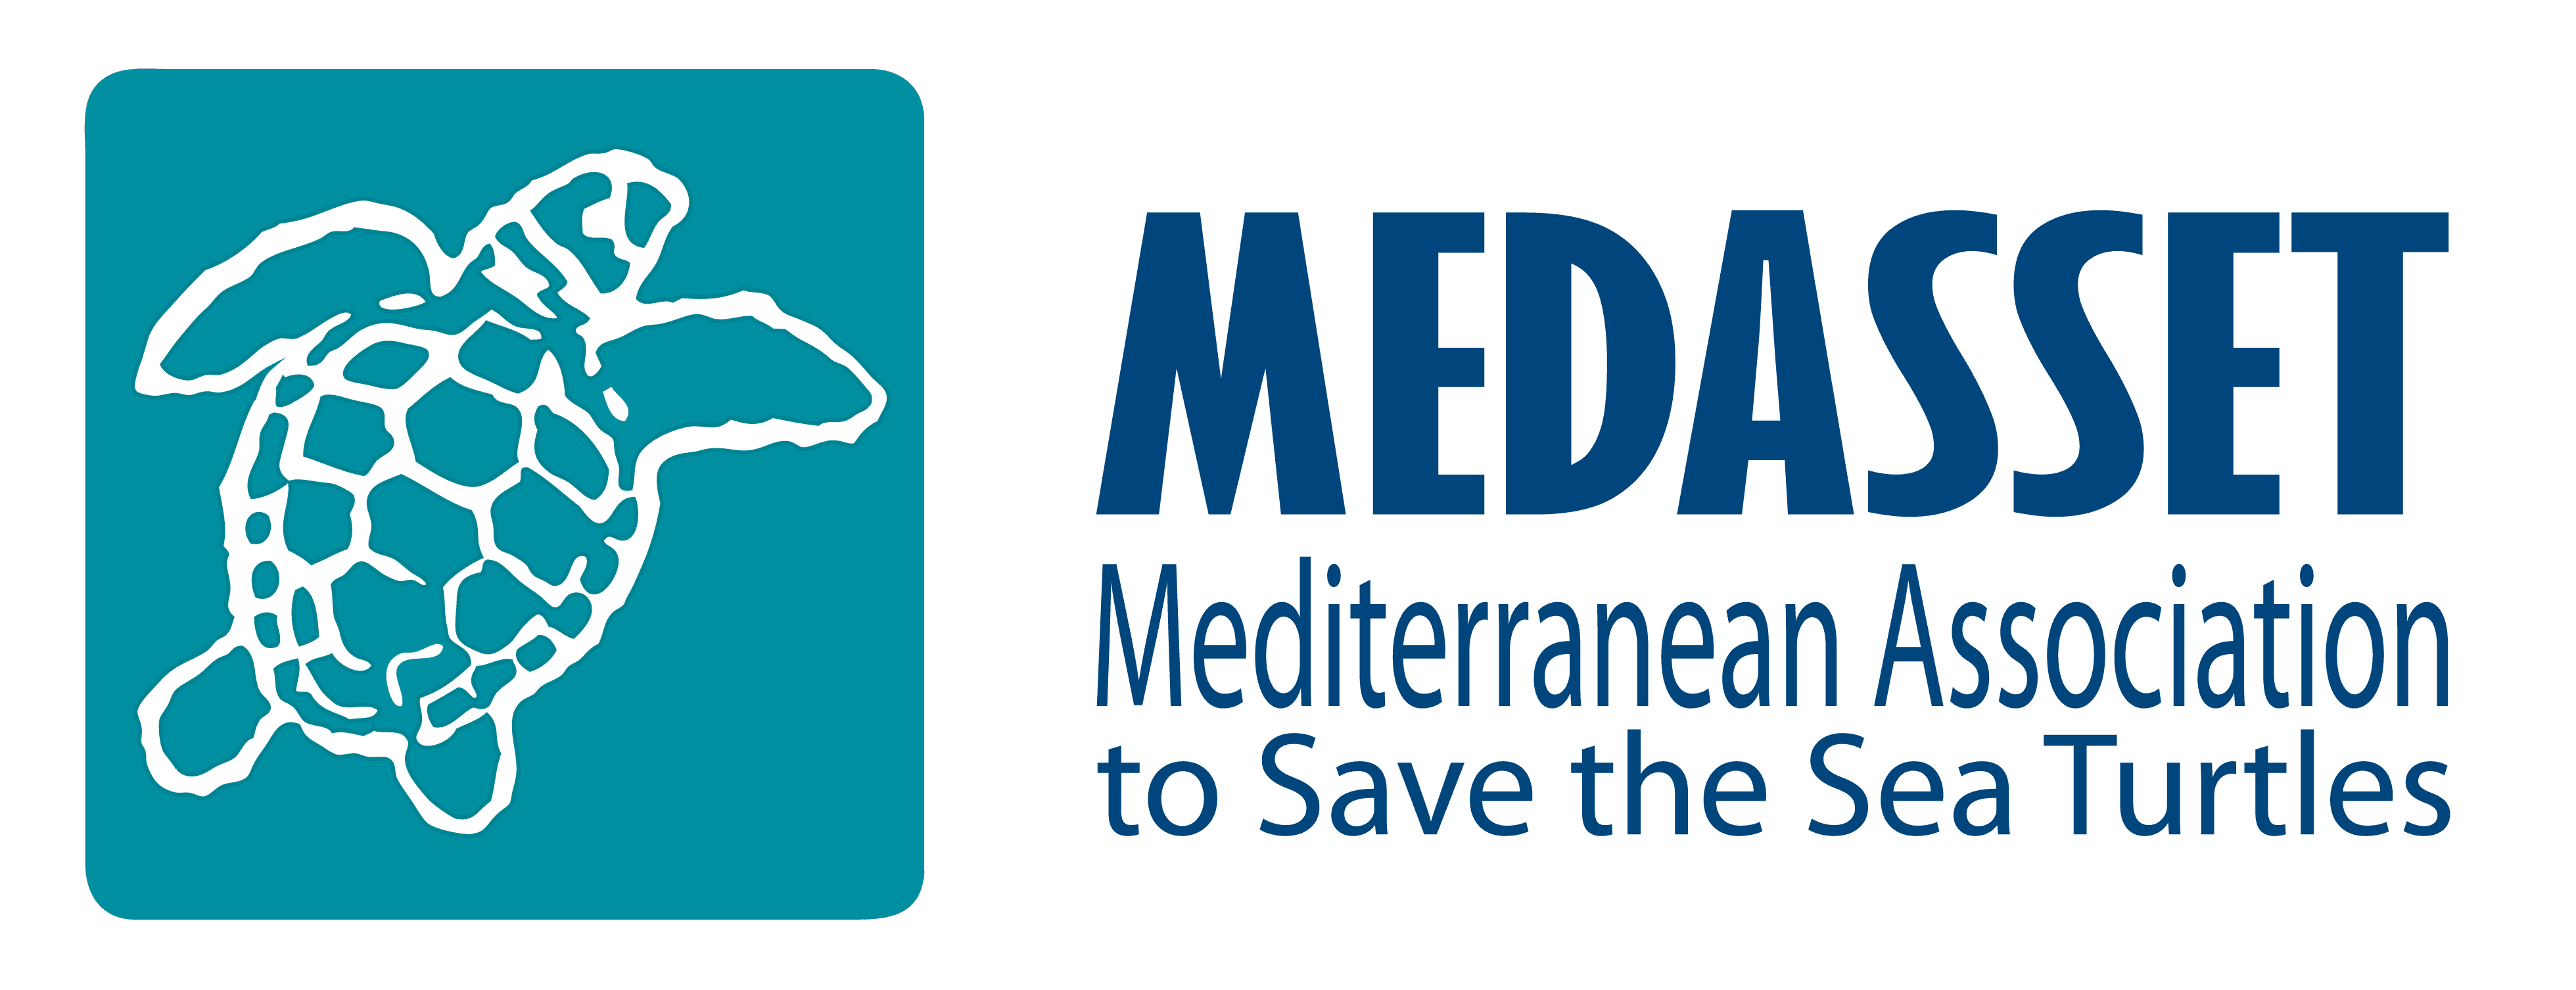 Medasset-logo